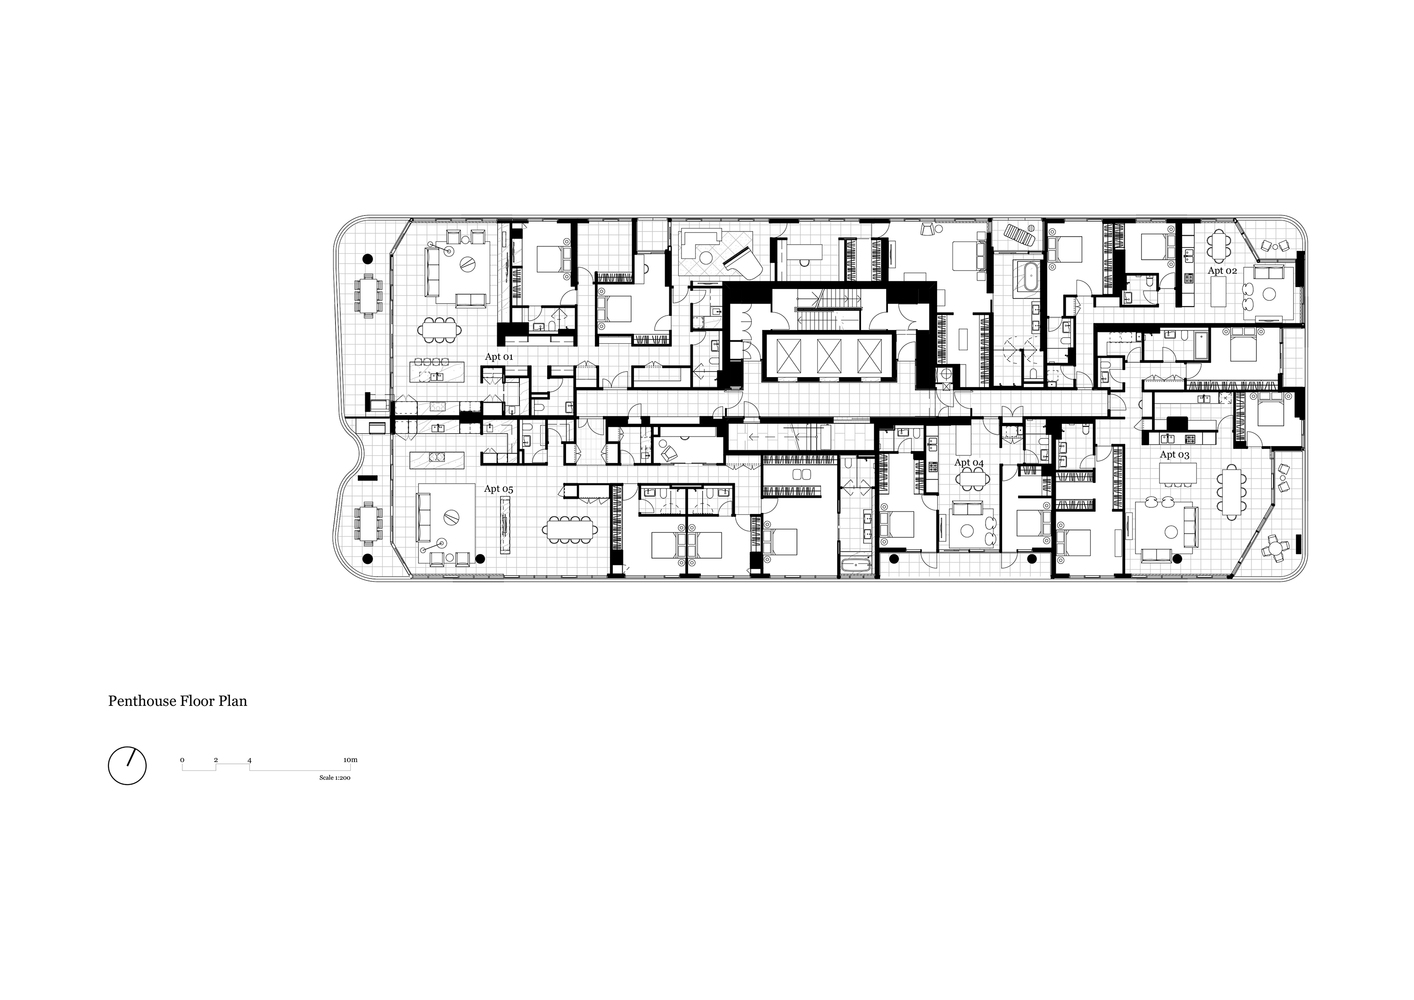 Penthouse_Floor_Plan_-_Queens_Domain_-_DKO_Architecture.jpg